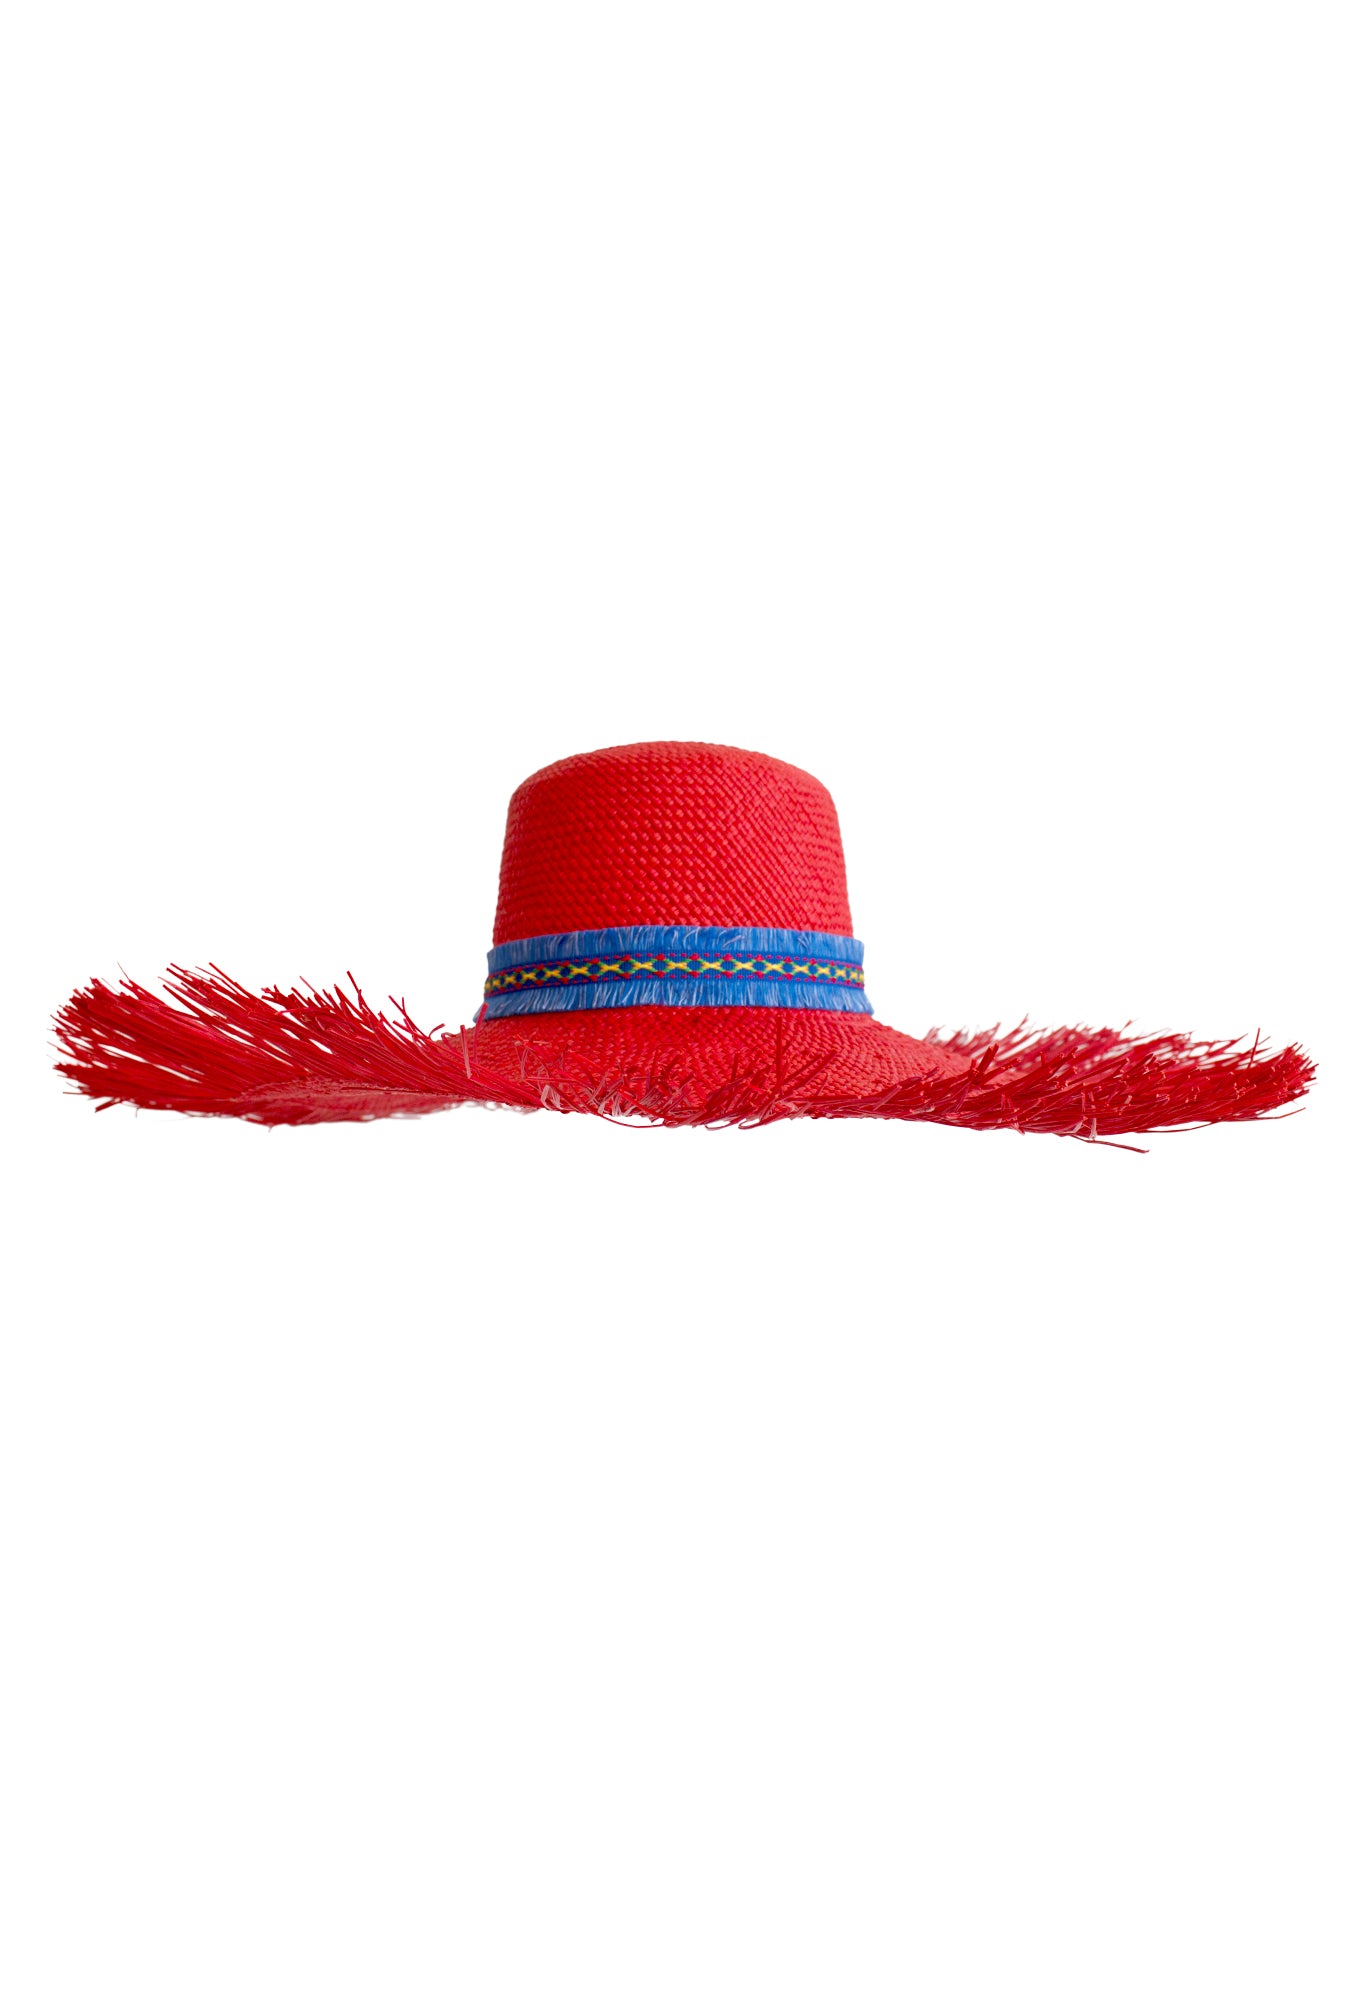 Catalina Red Fringe Hat